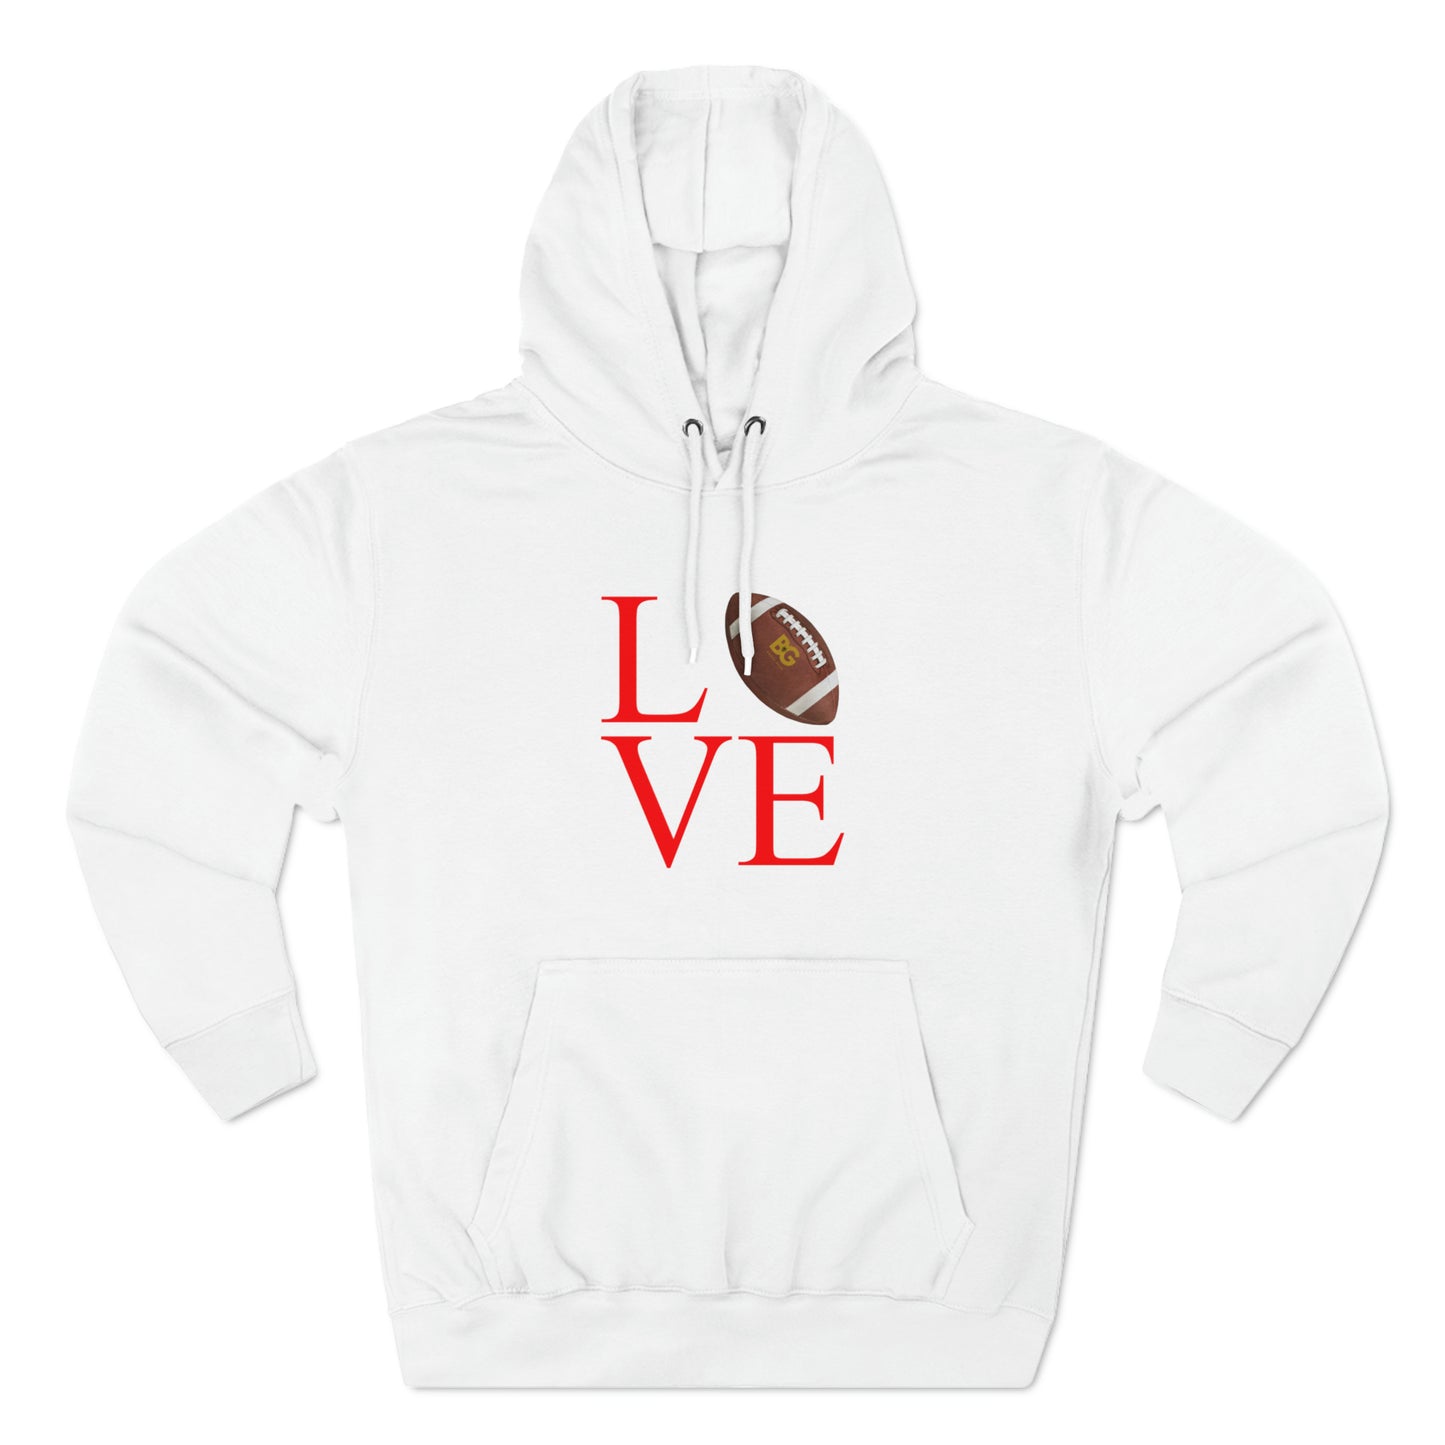 BG "LOVE football" Premium Pullover Hoodie